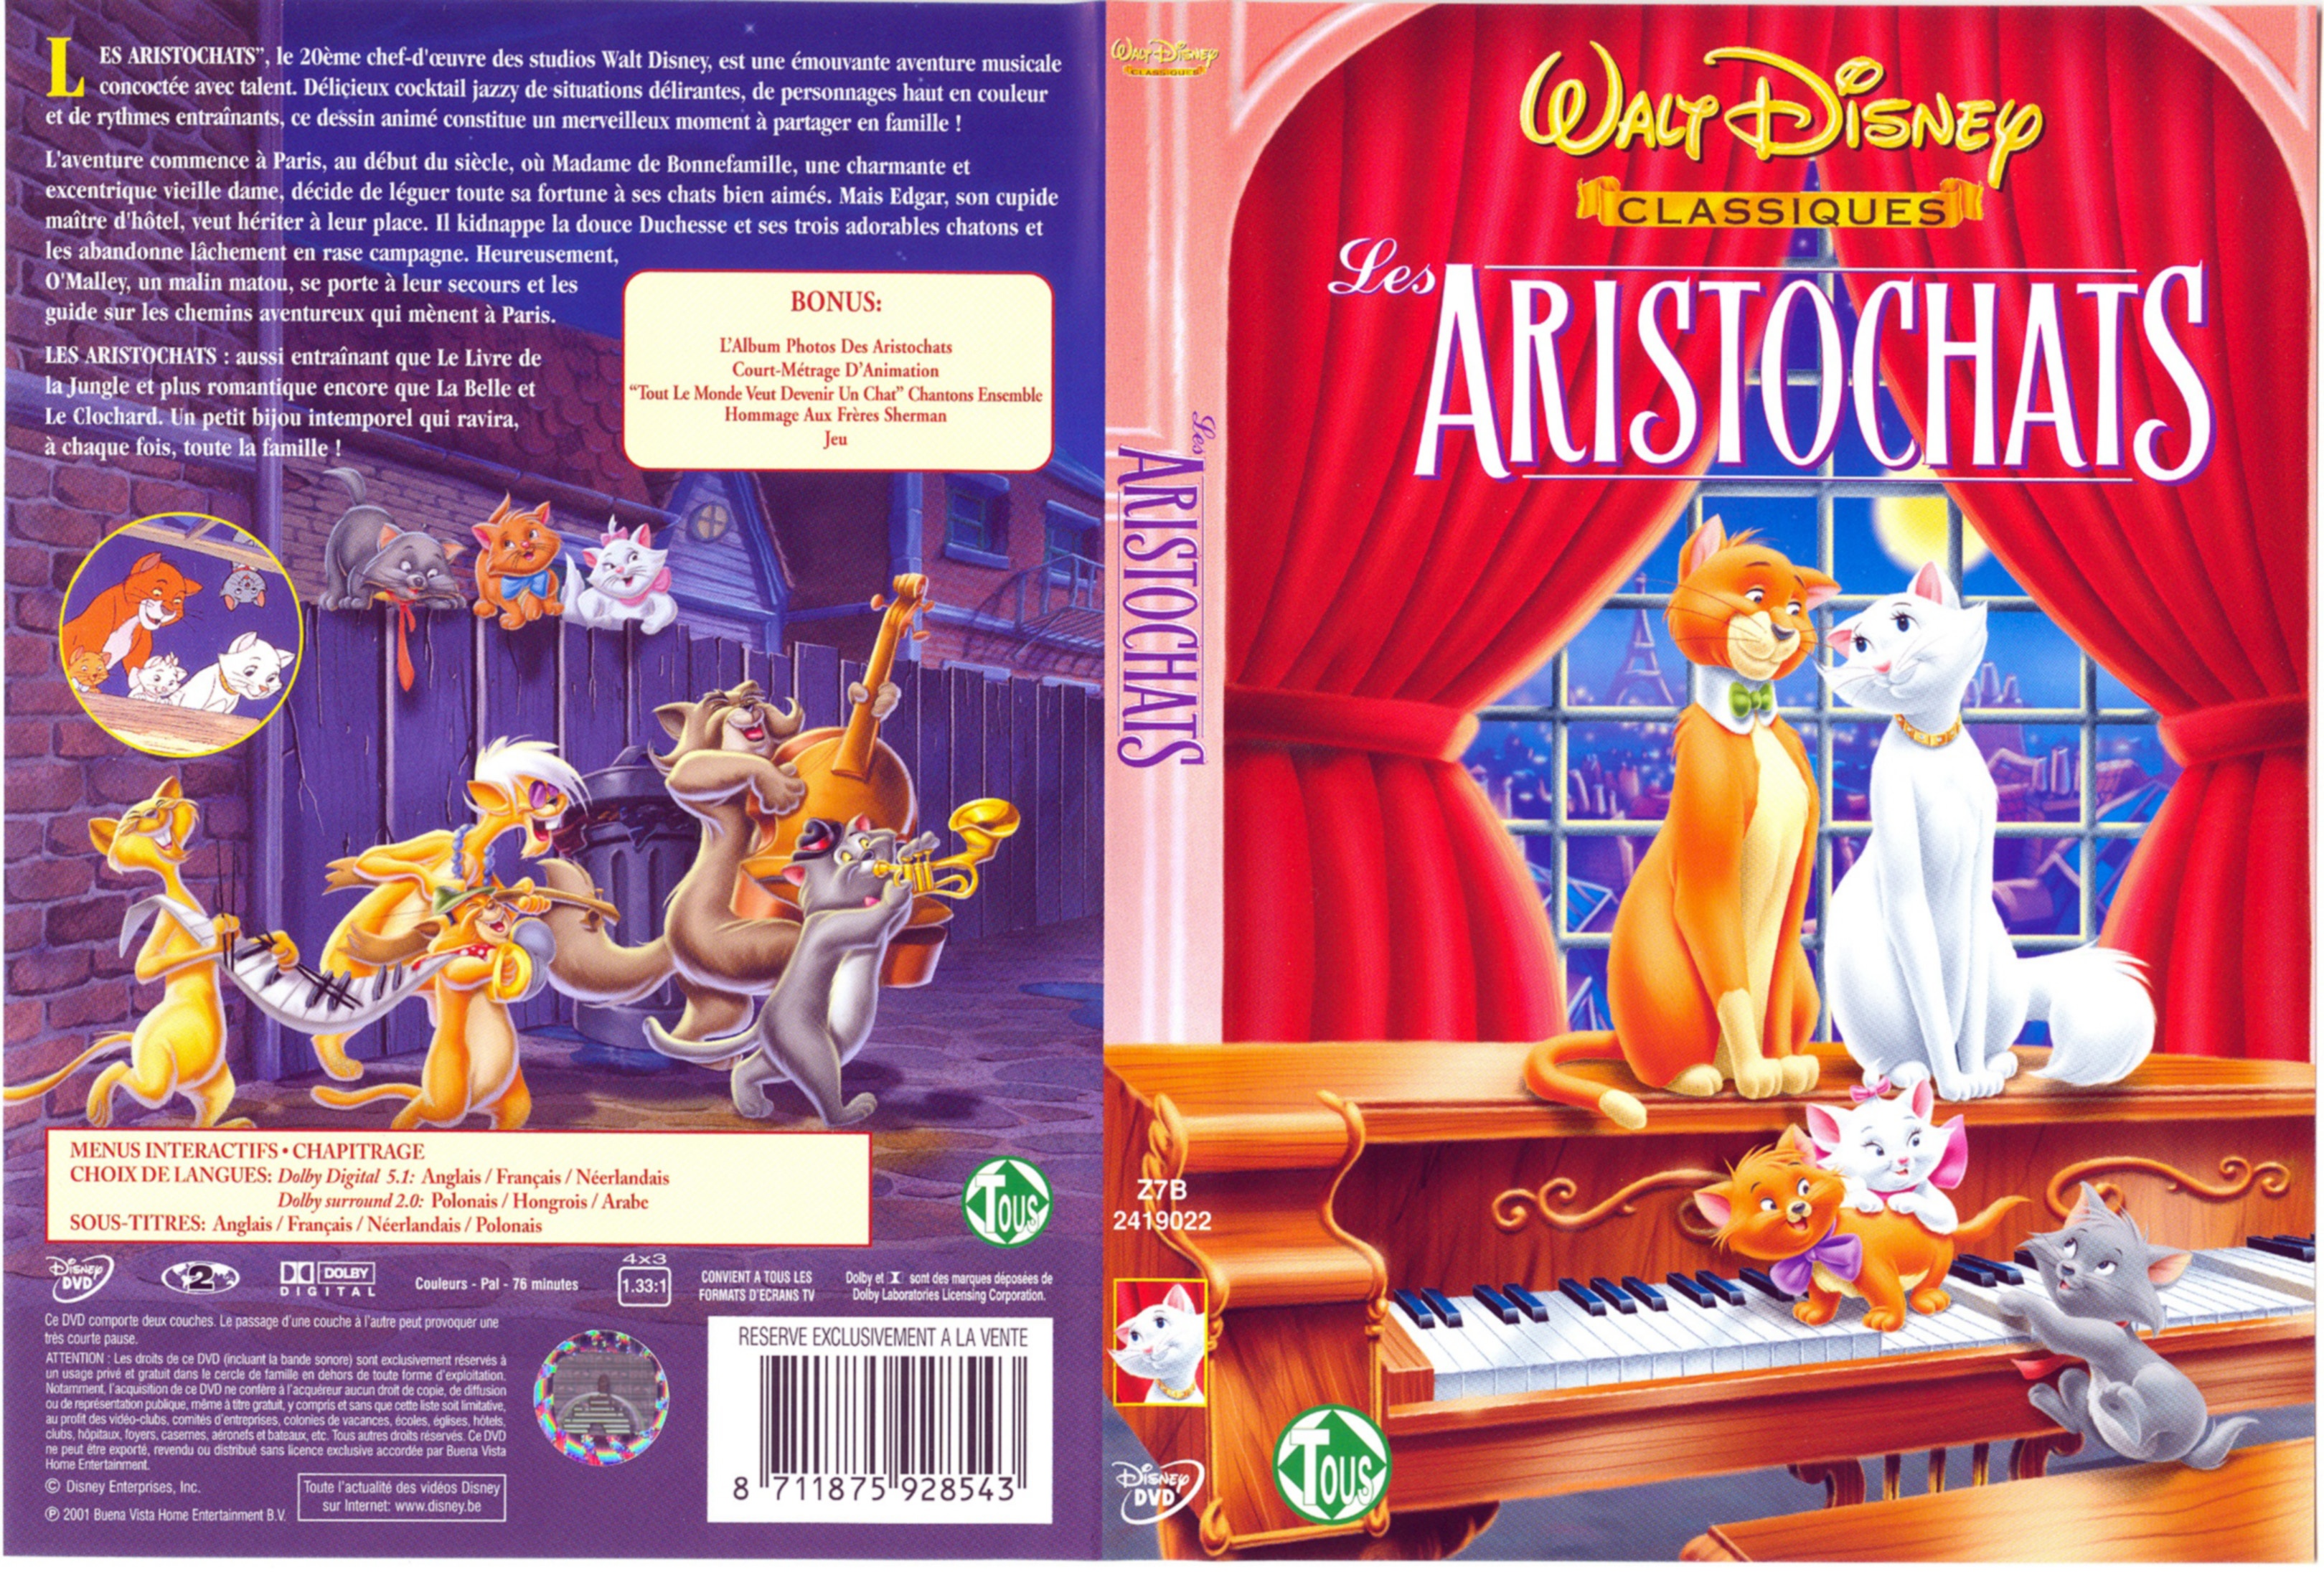 Jaquette DVD Les aristochats v2